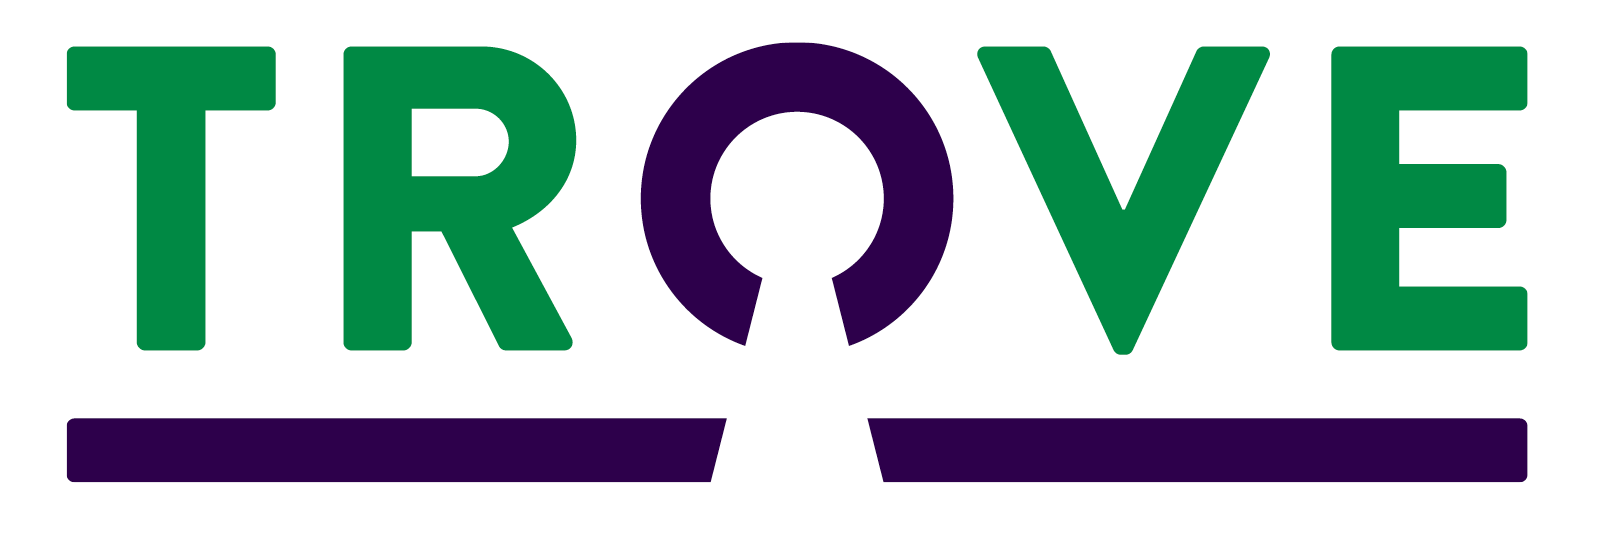 Our logo | Trove